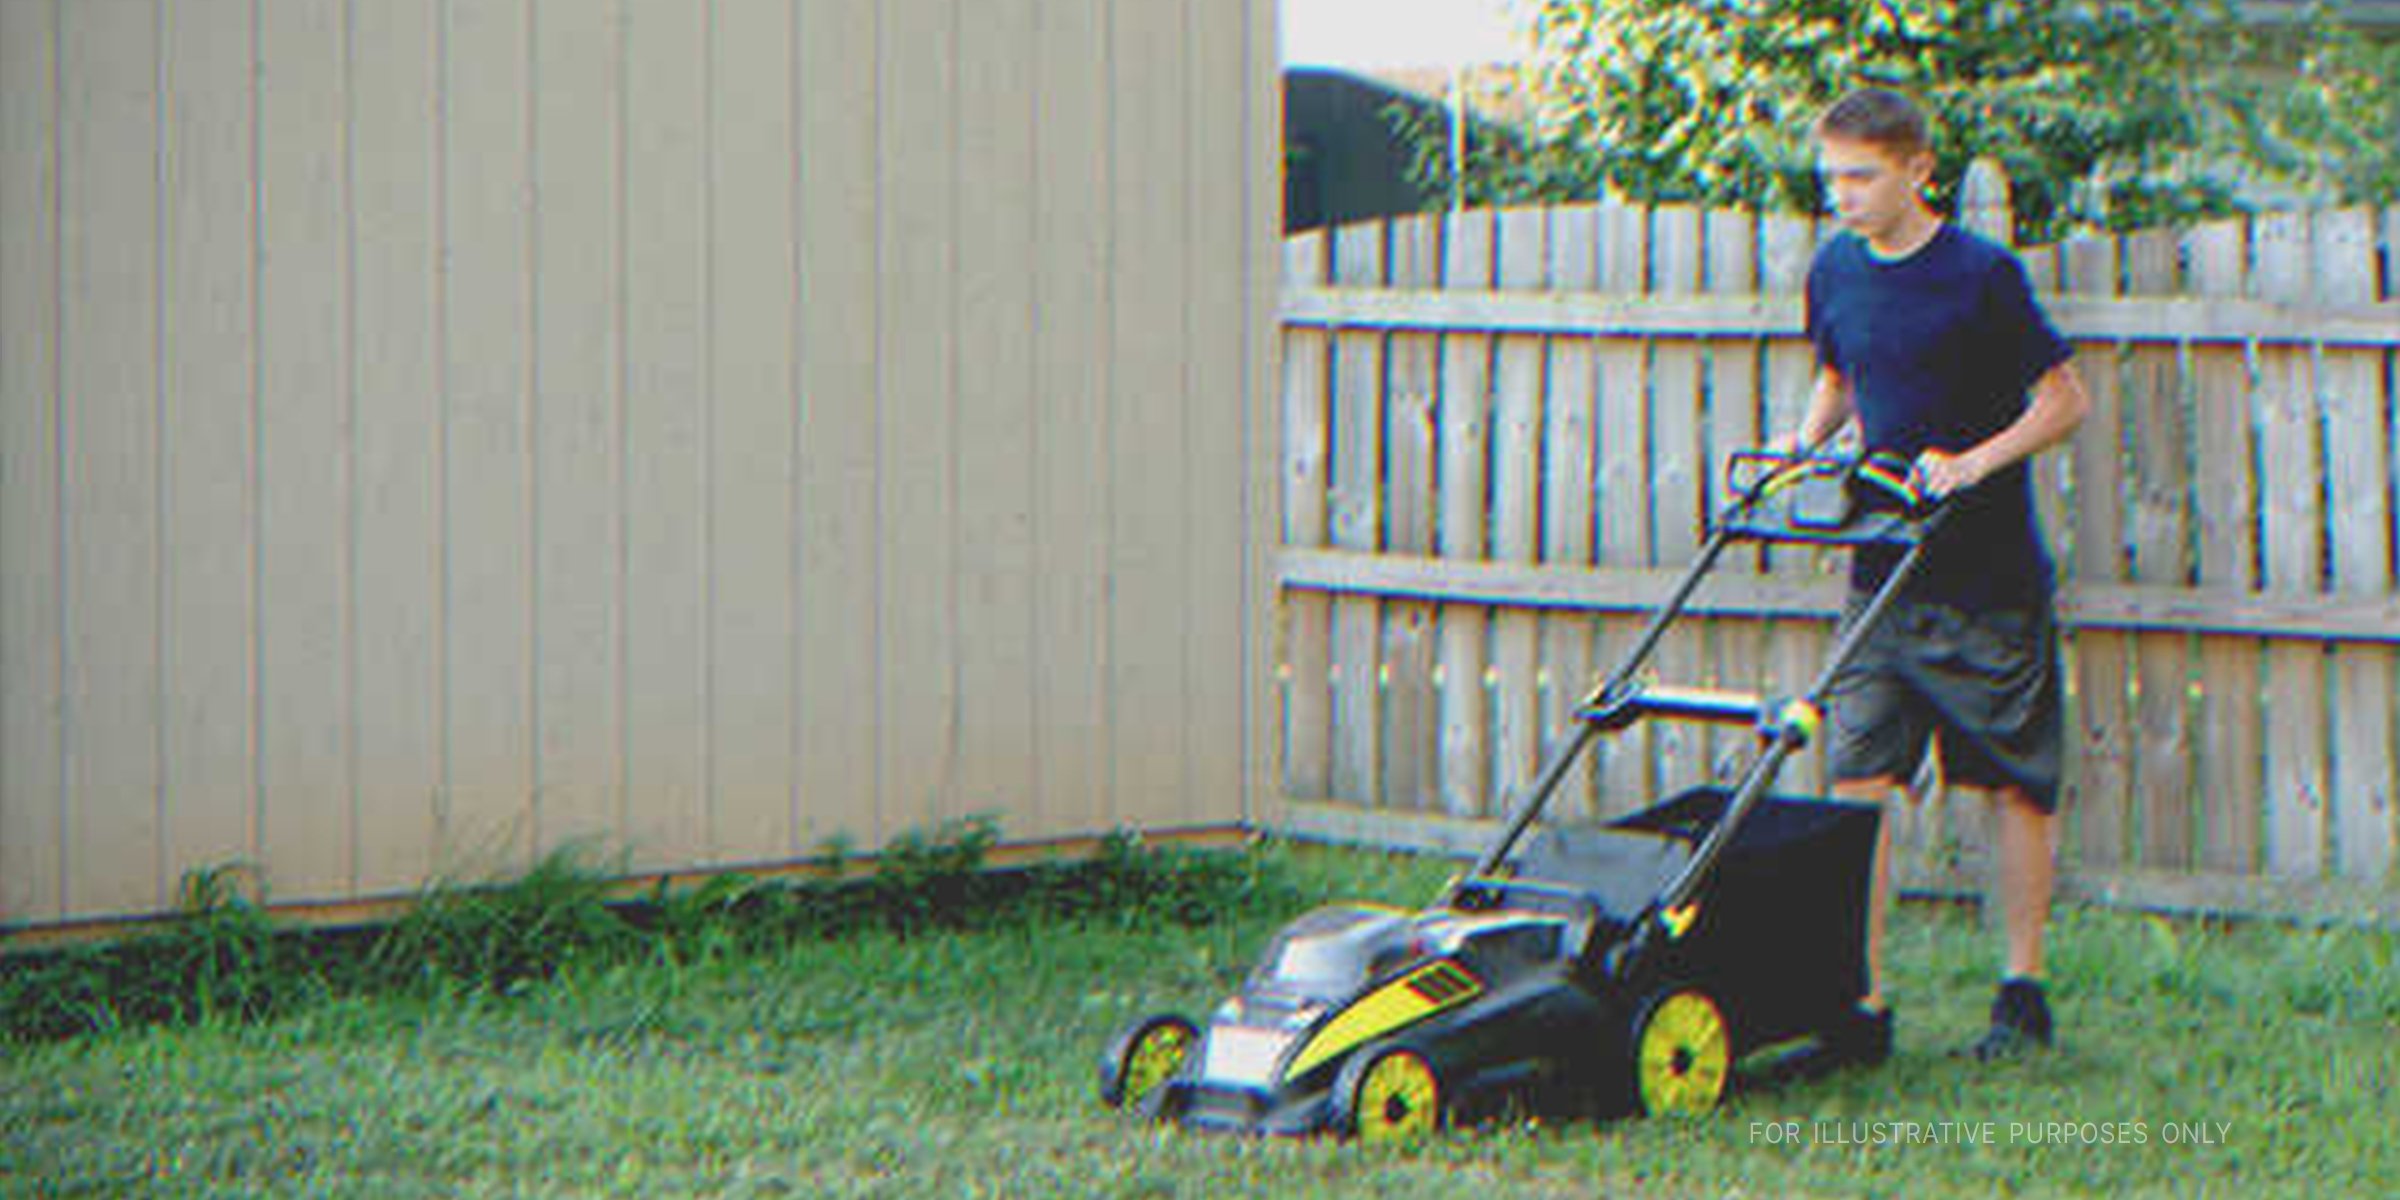 Teen Mowing The Lawn. | Source: Shutterstock